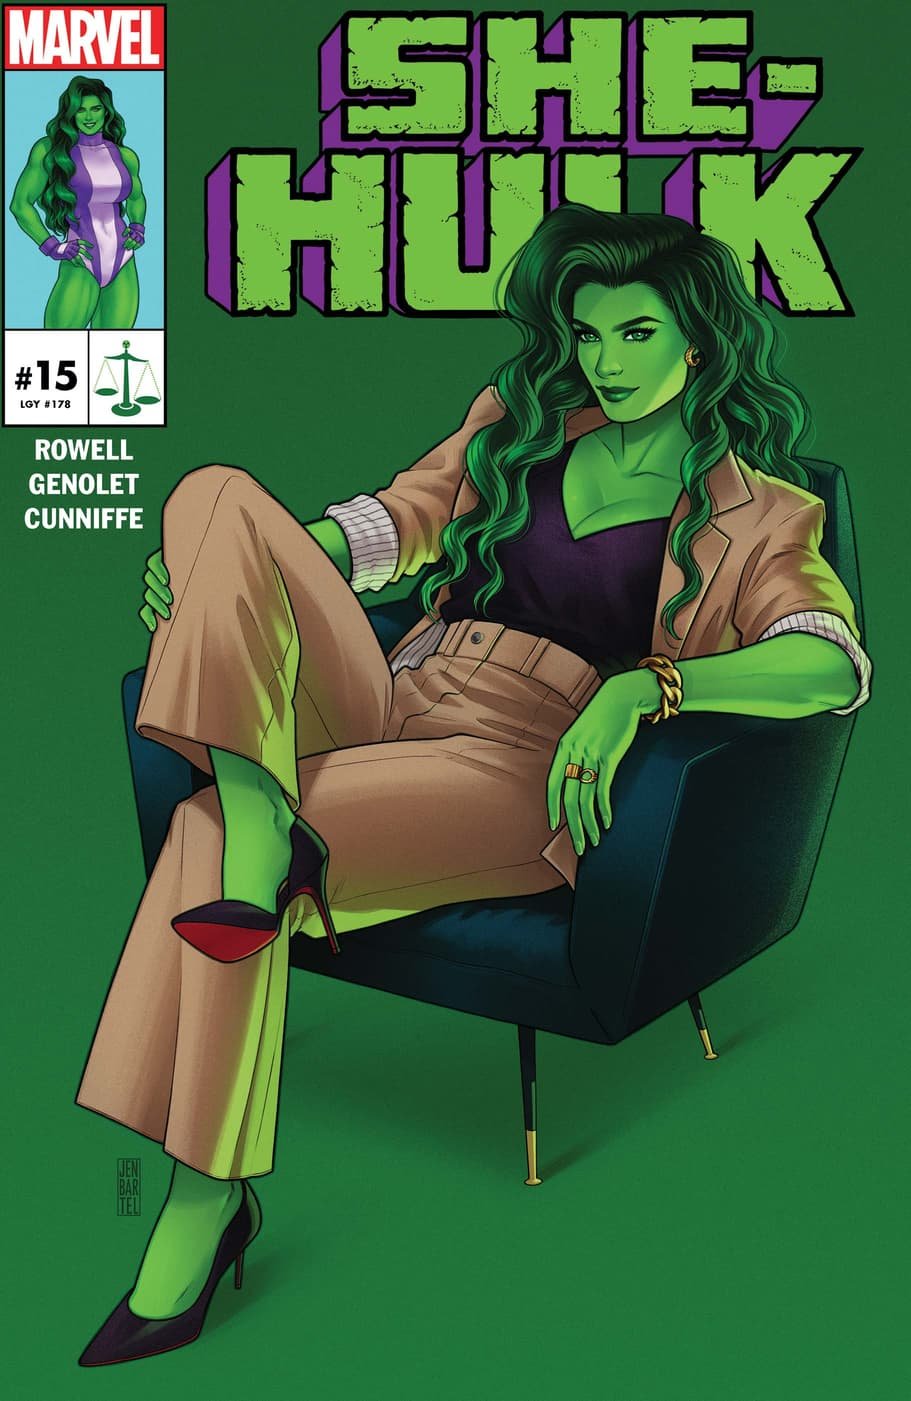 She-Hulk sits in an armchair in She-Hulk #15 cover.